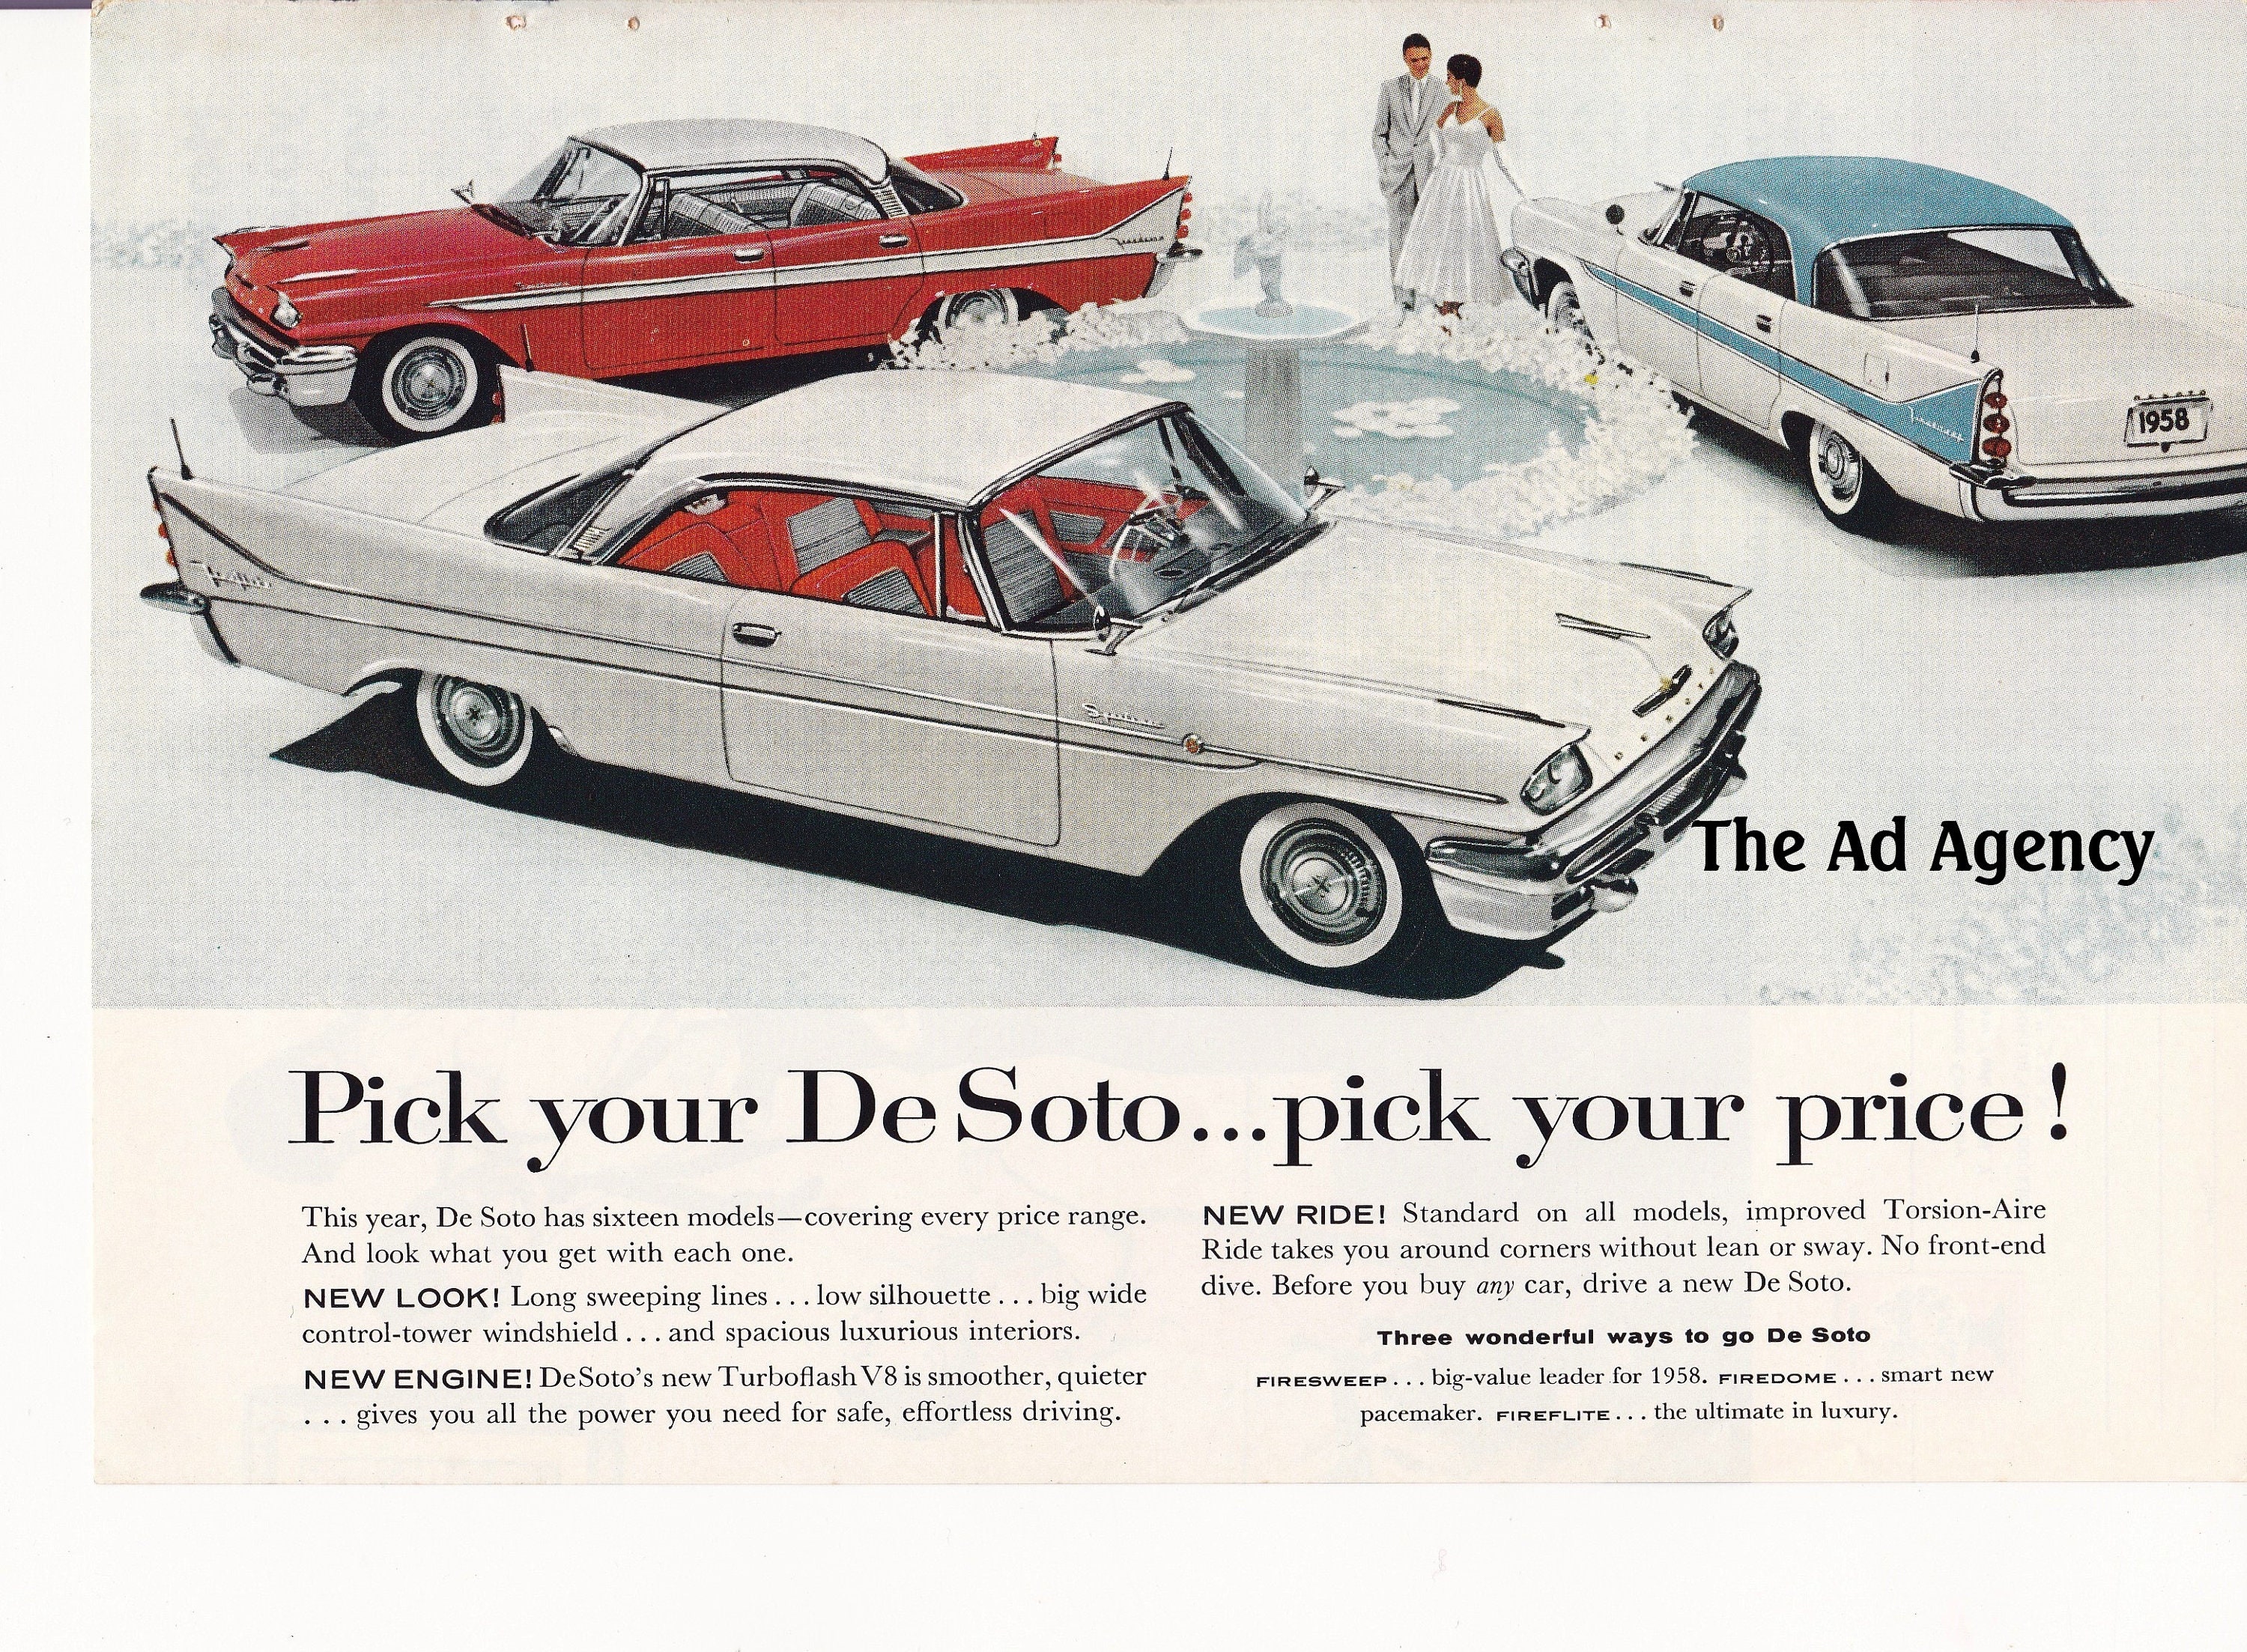 Classic 1958 DeSoto Car Ad Reproduction Metal Sign FREE SHIPPING Garage Decor 